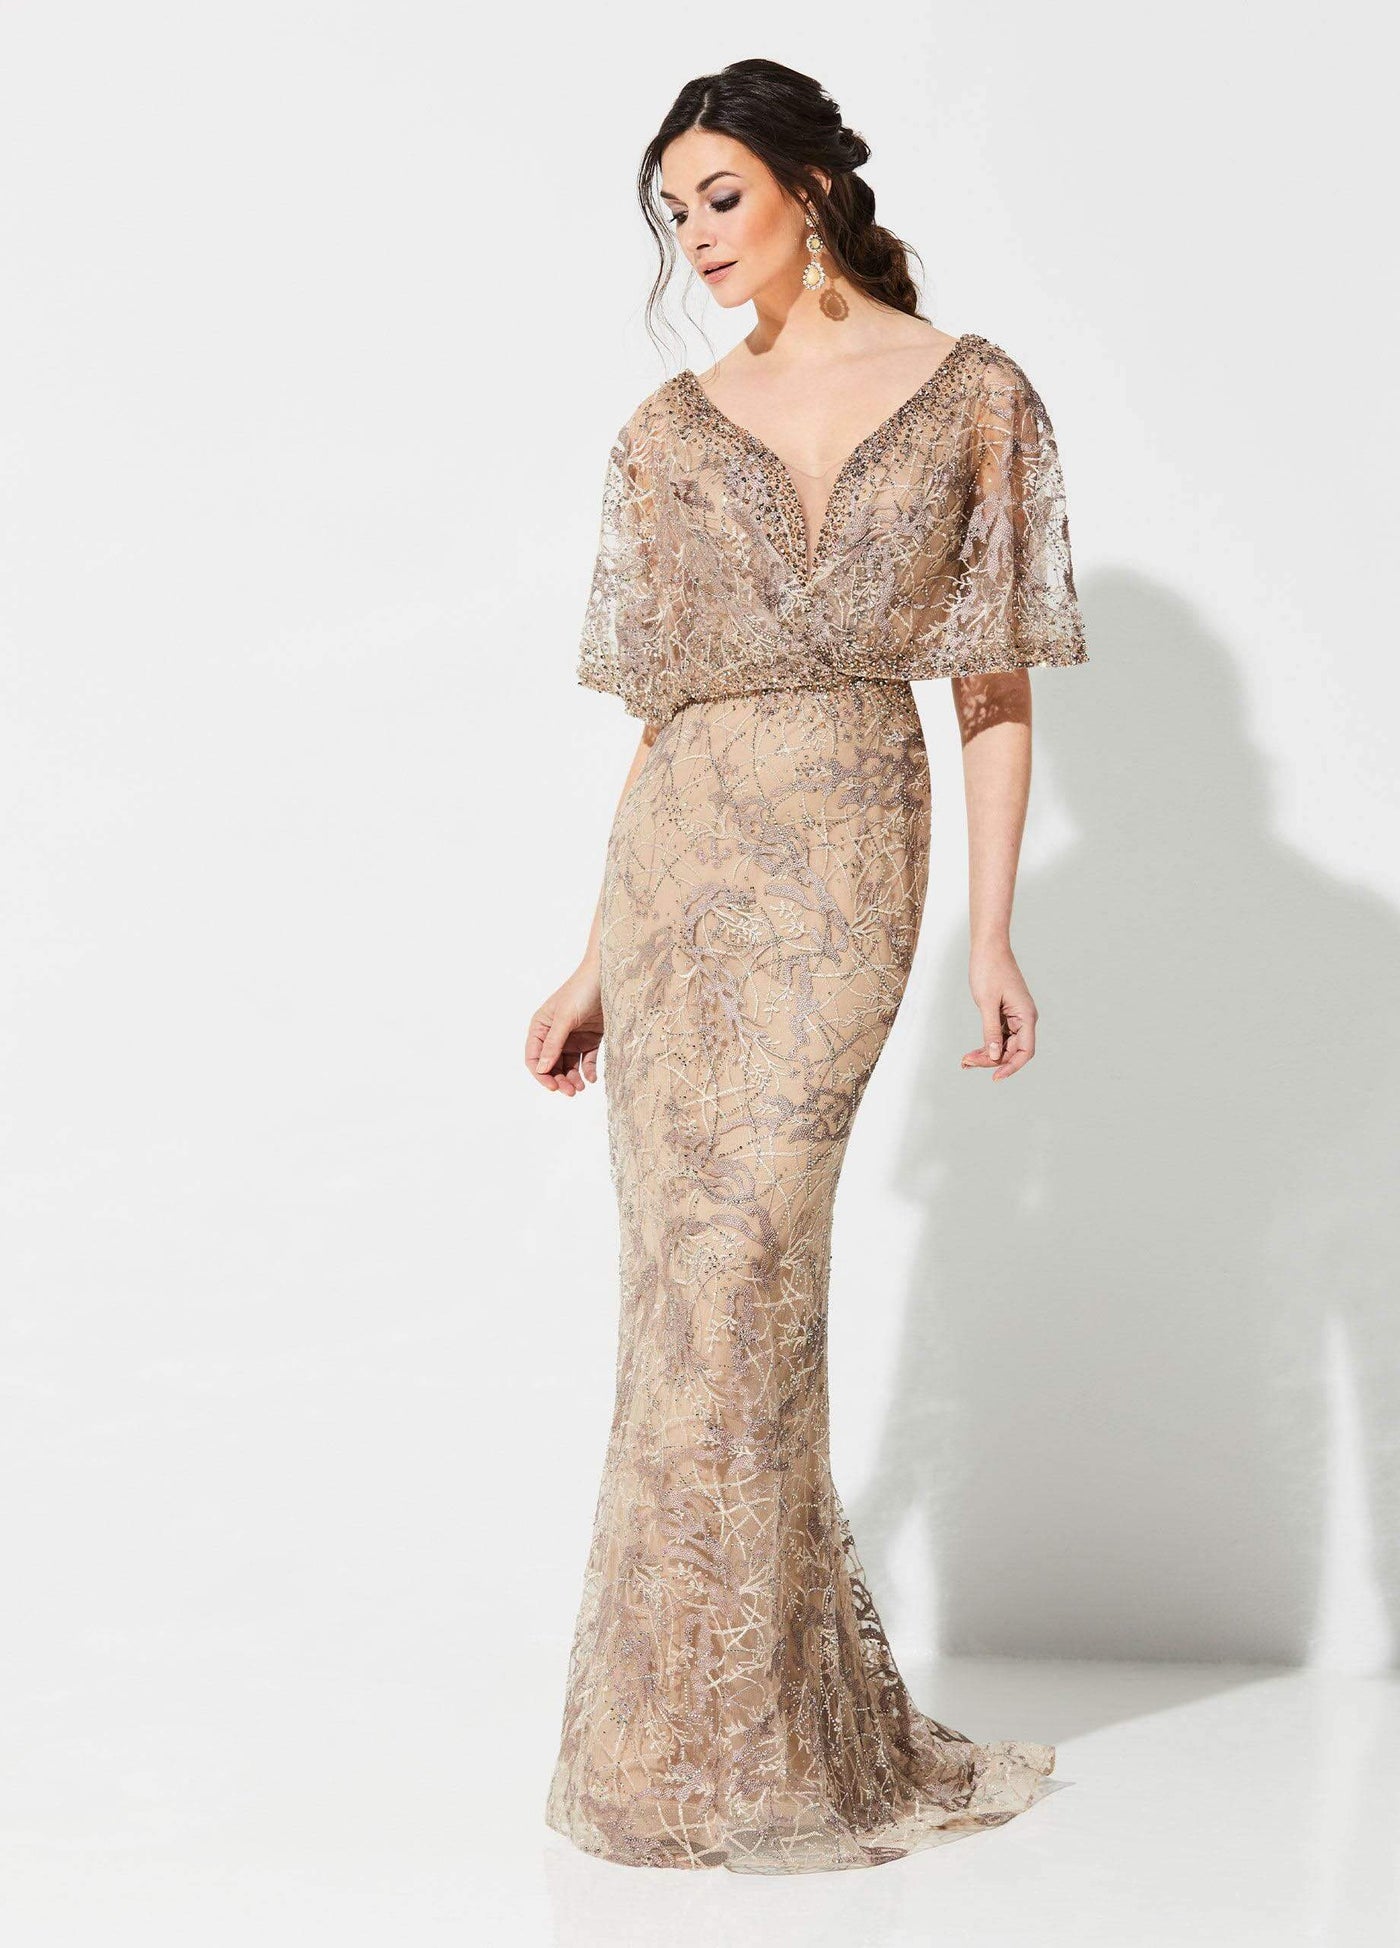 Ivonne D for Mon Cheri - 219D72W Embroidered Deep V-neck Sheath Dress Special Occasion Dress 16W / Antique Gold